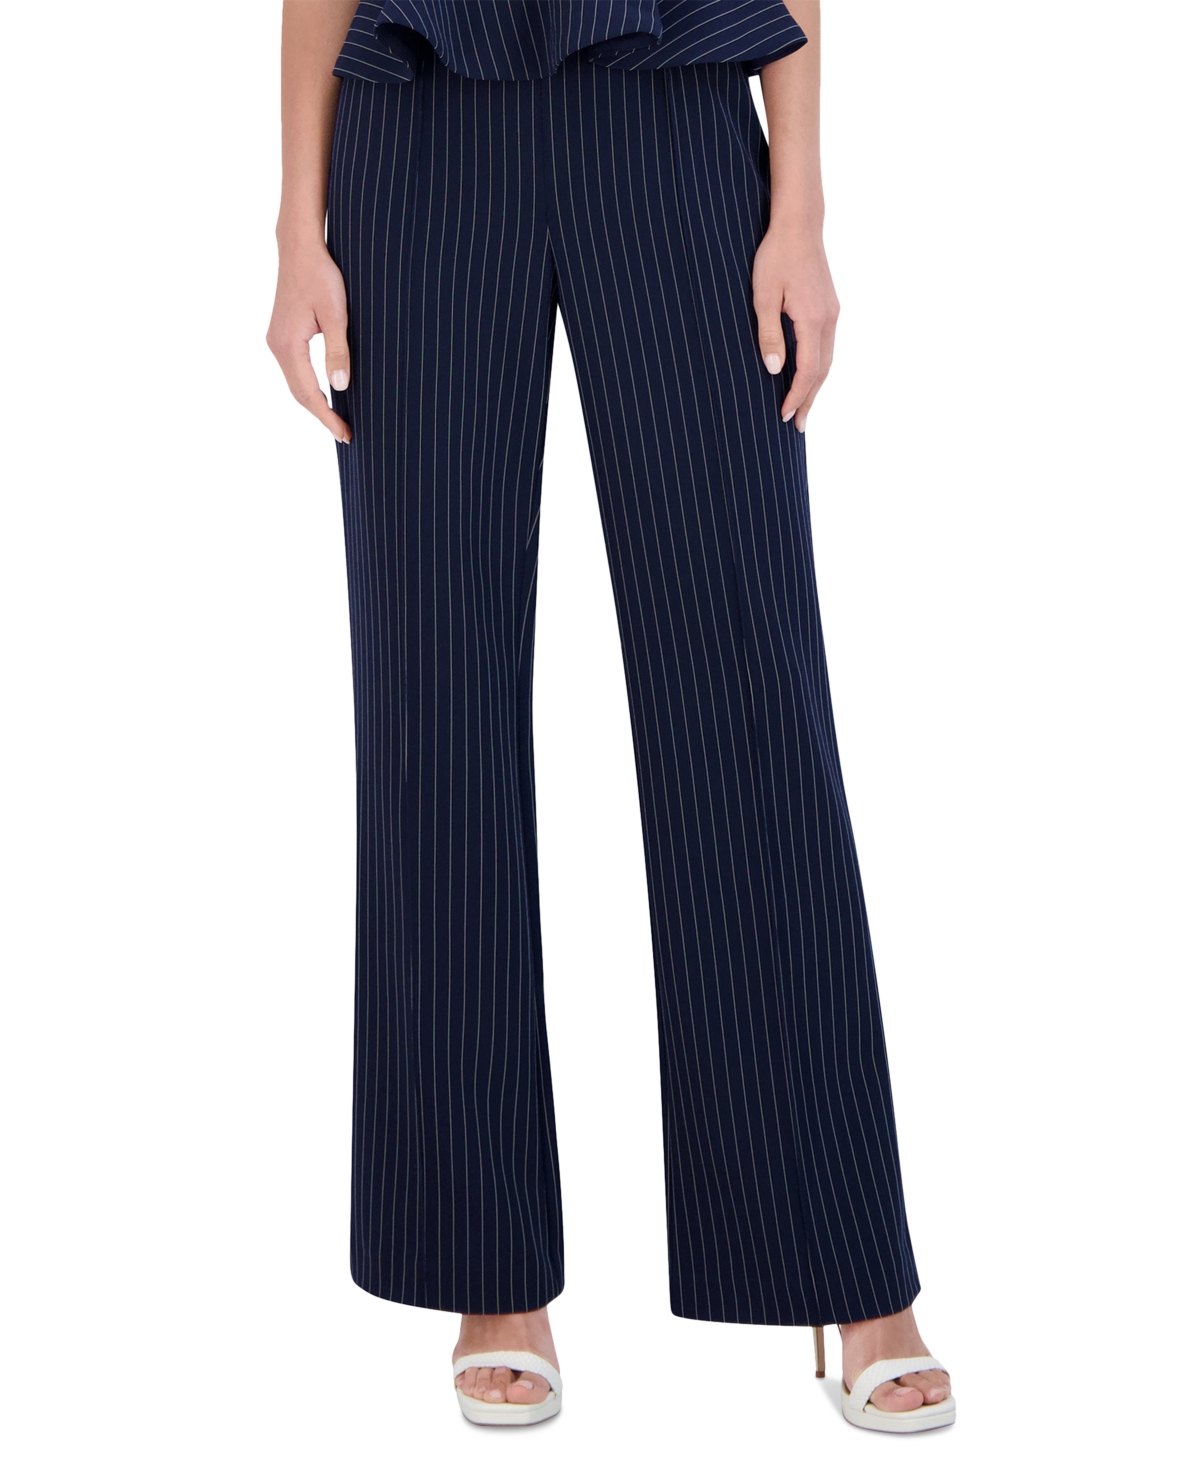 Shop Bcbg New York Women's Pinstripe Trousers